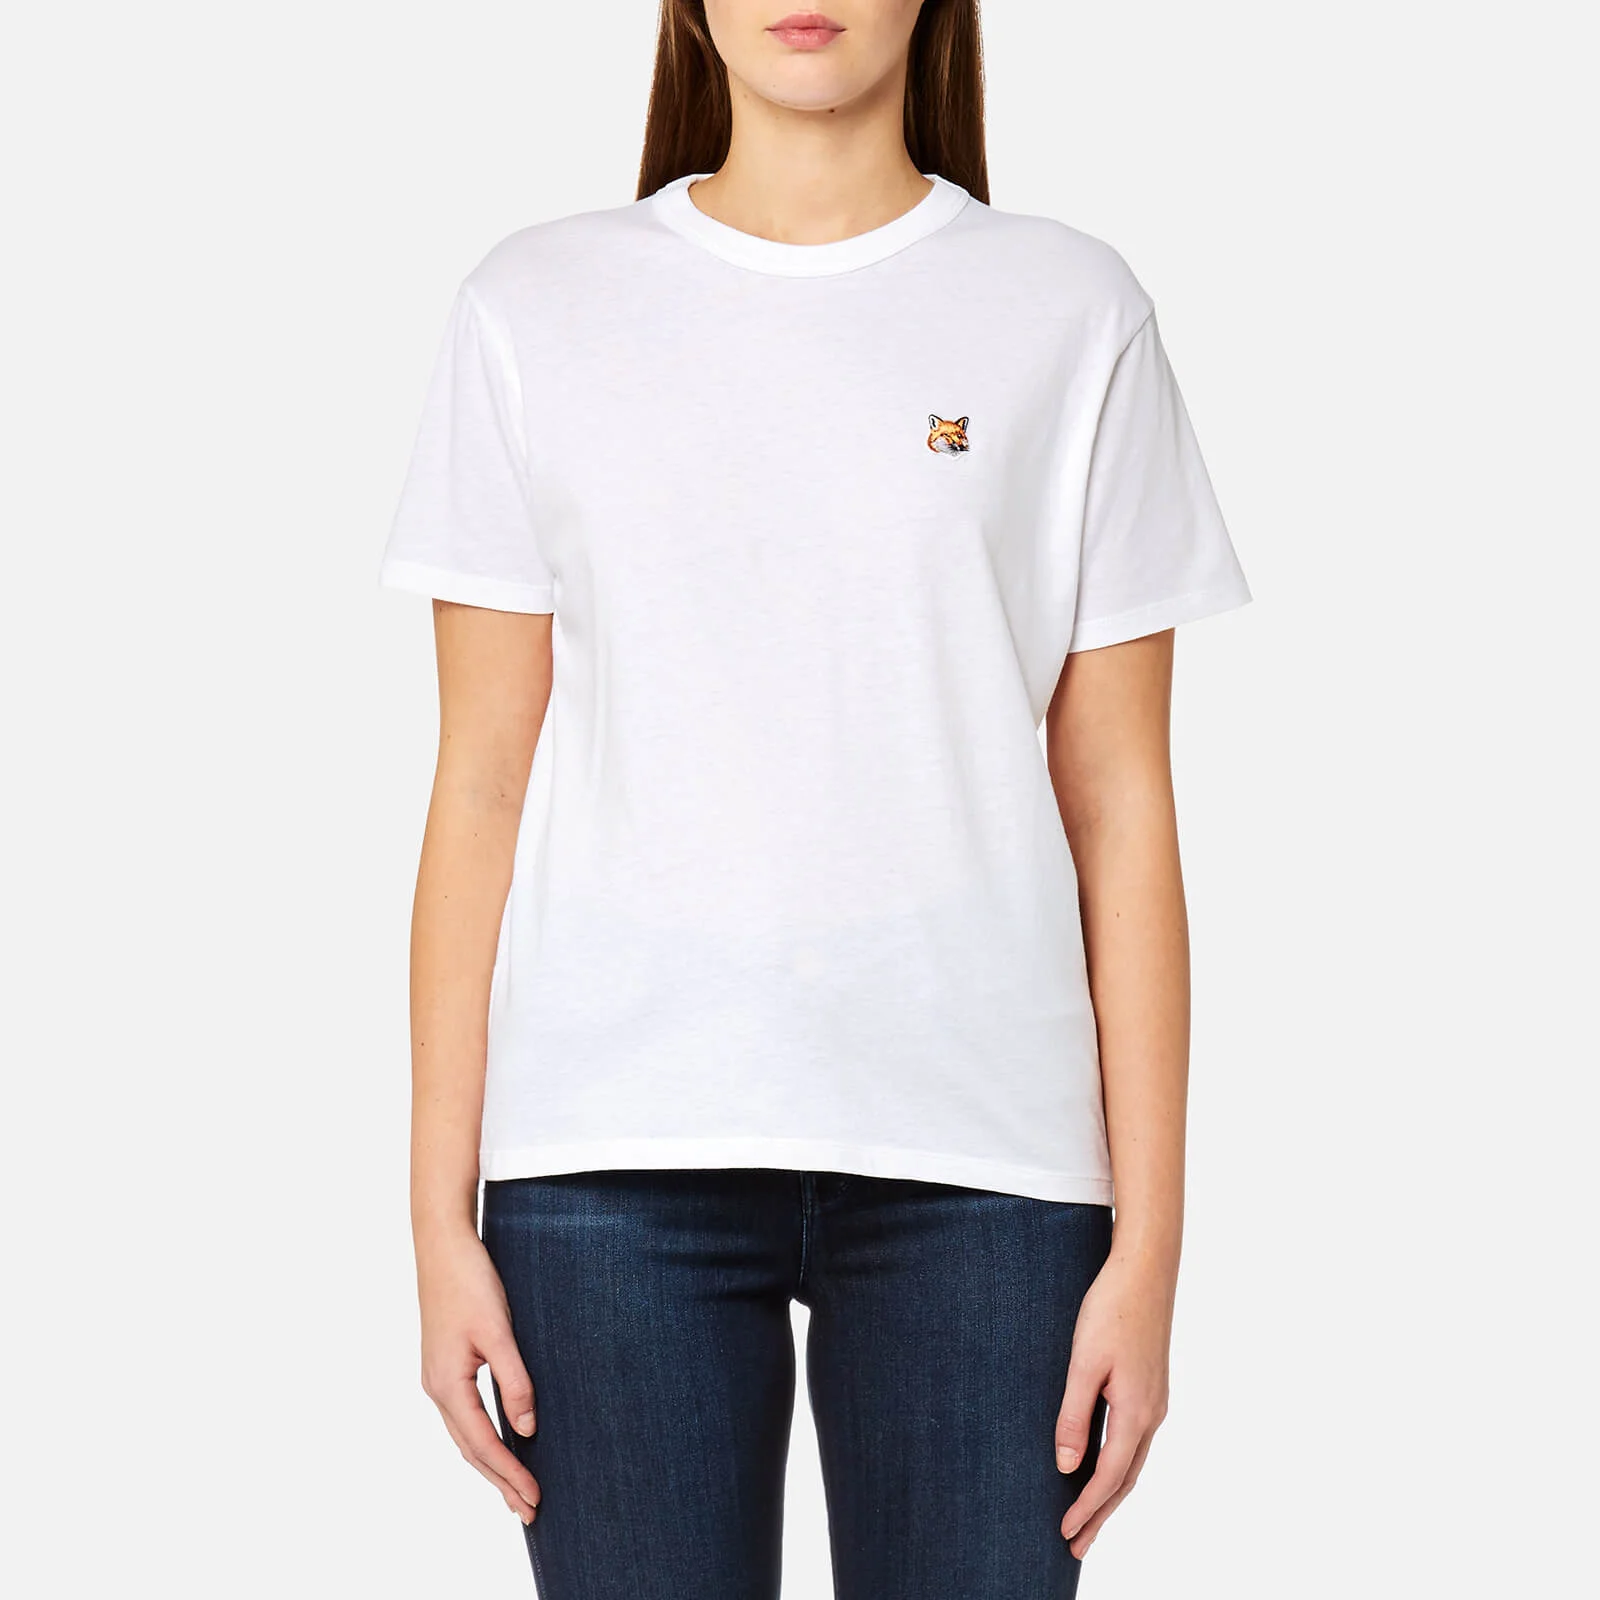 Maison Kitsuné Women's Fox Head Patch T-Shirt - White Image 1